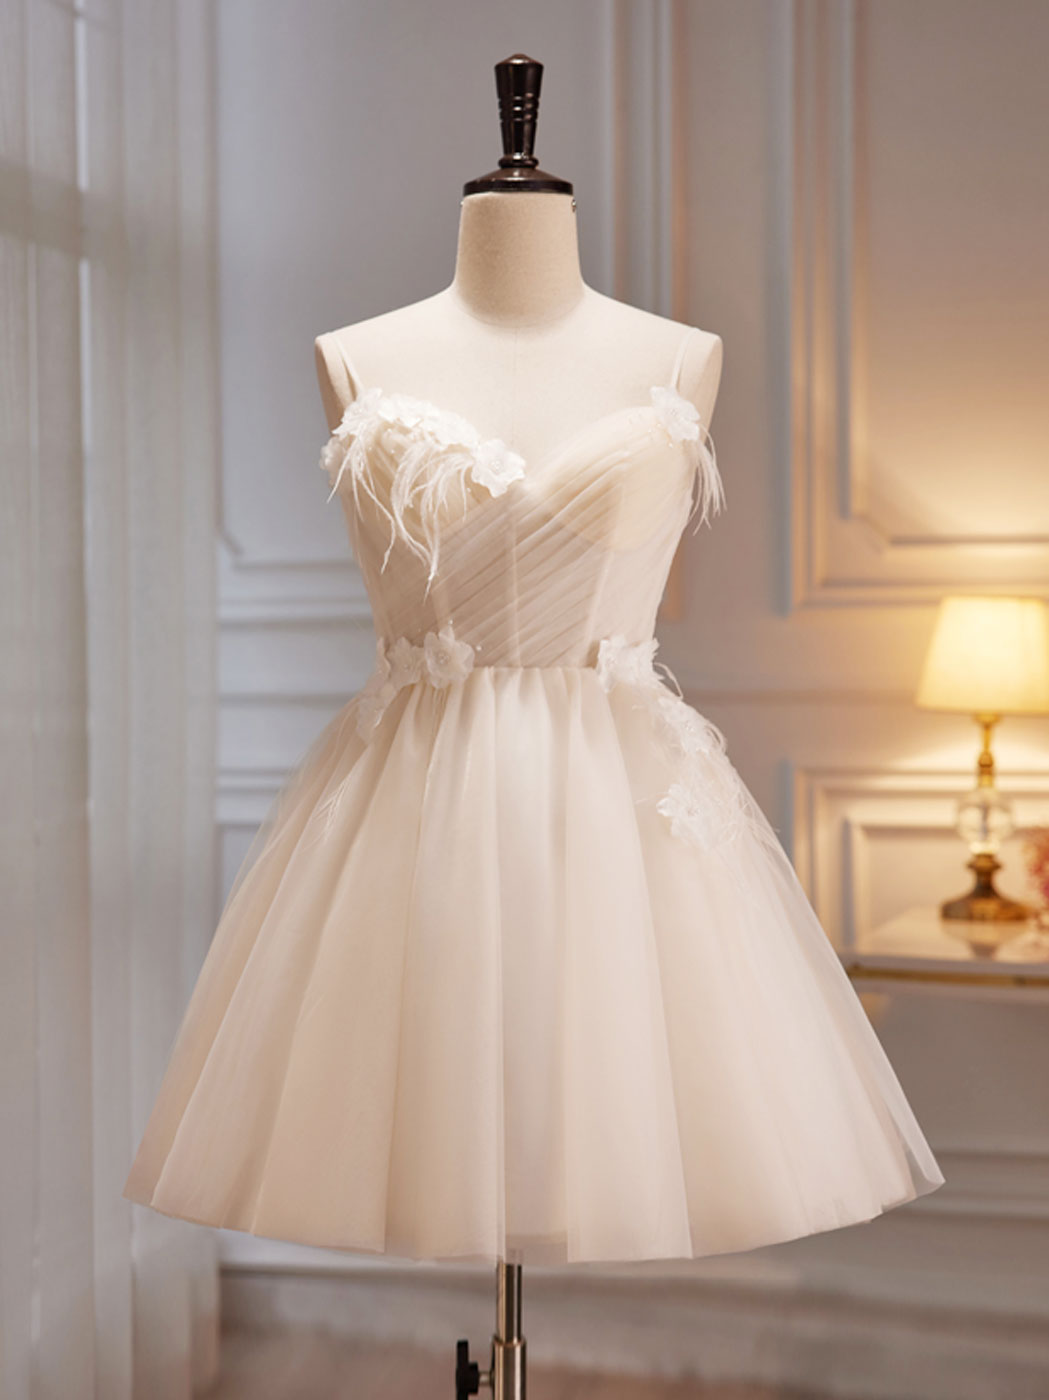 wedding white short dress